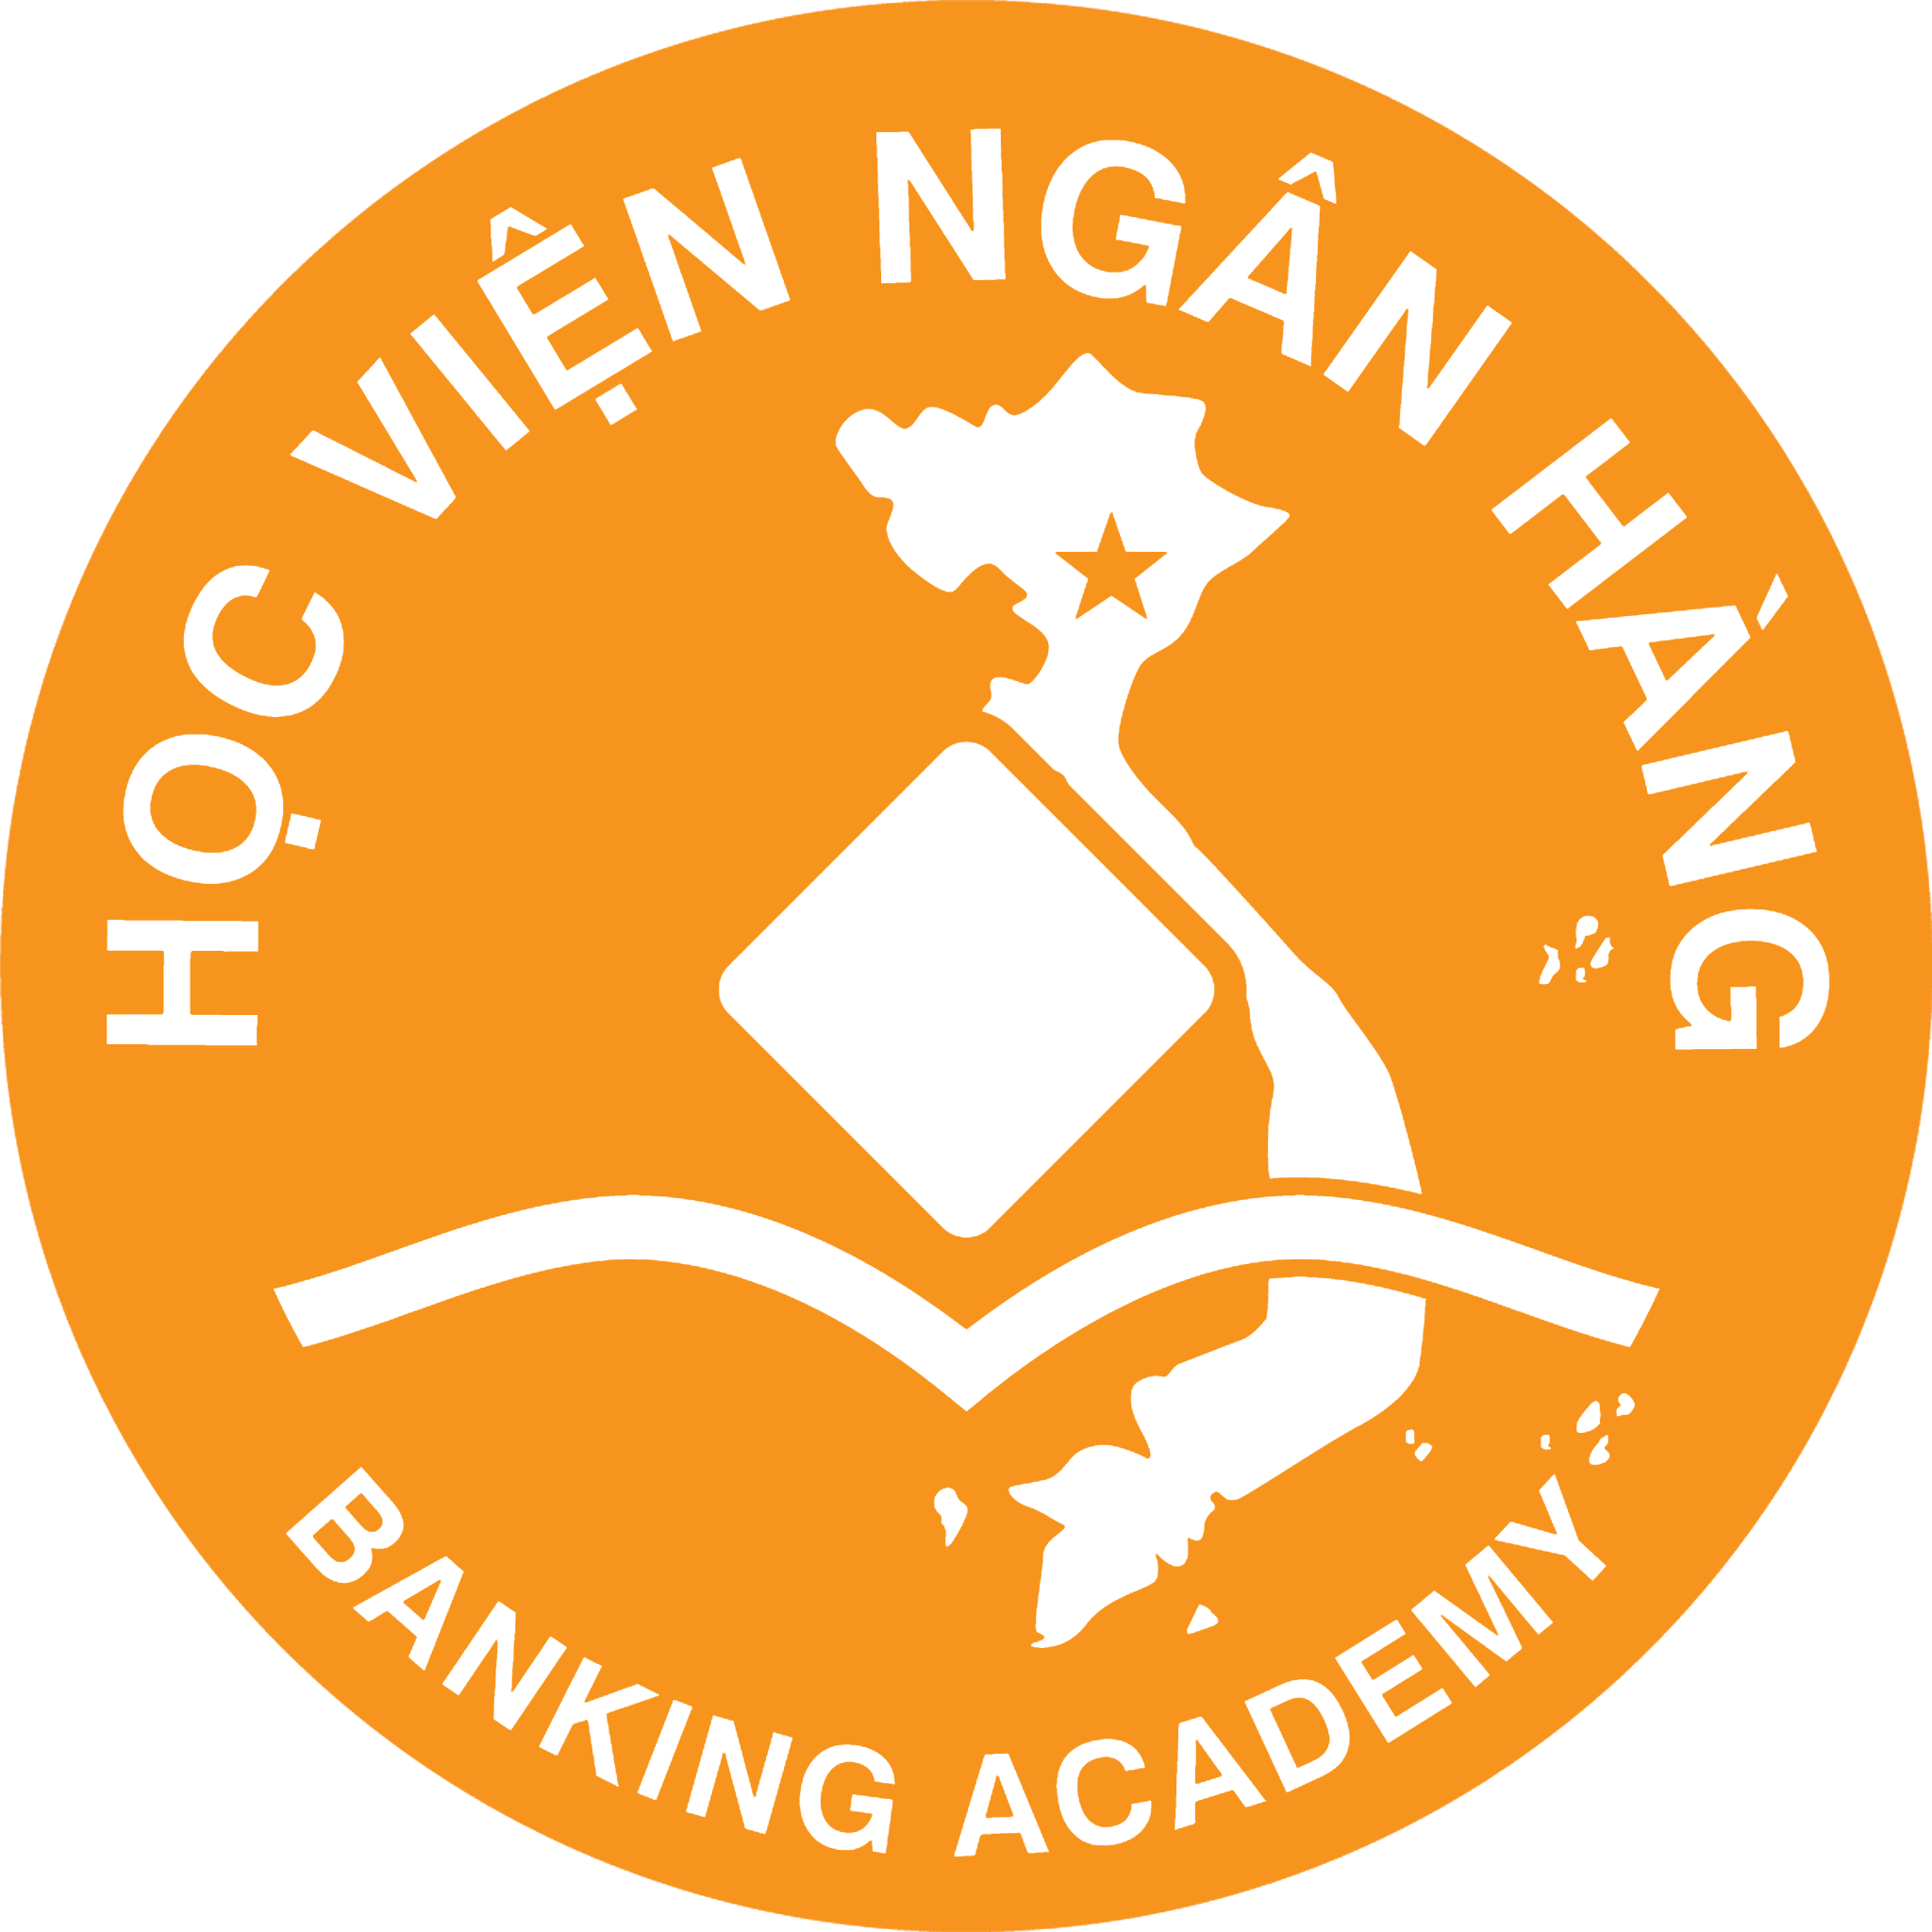 Banking Academy